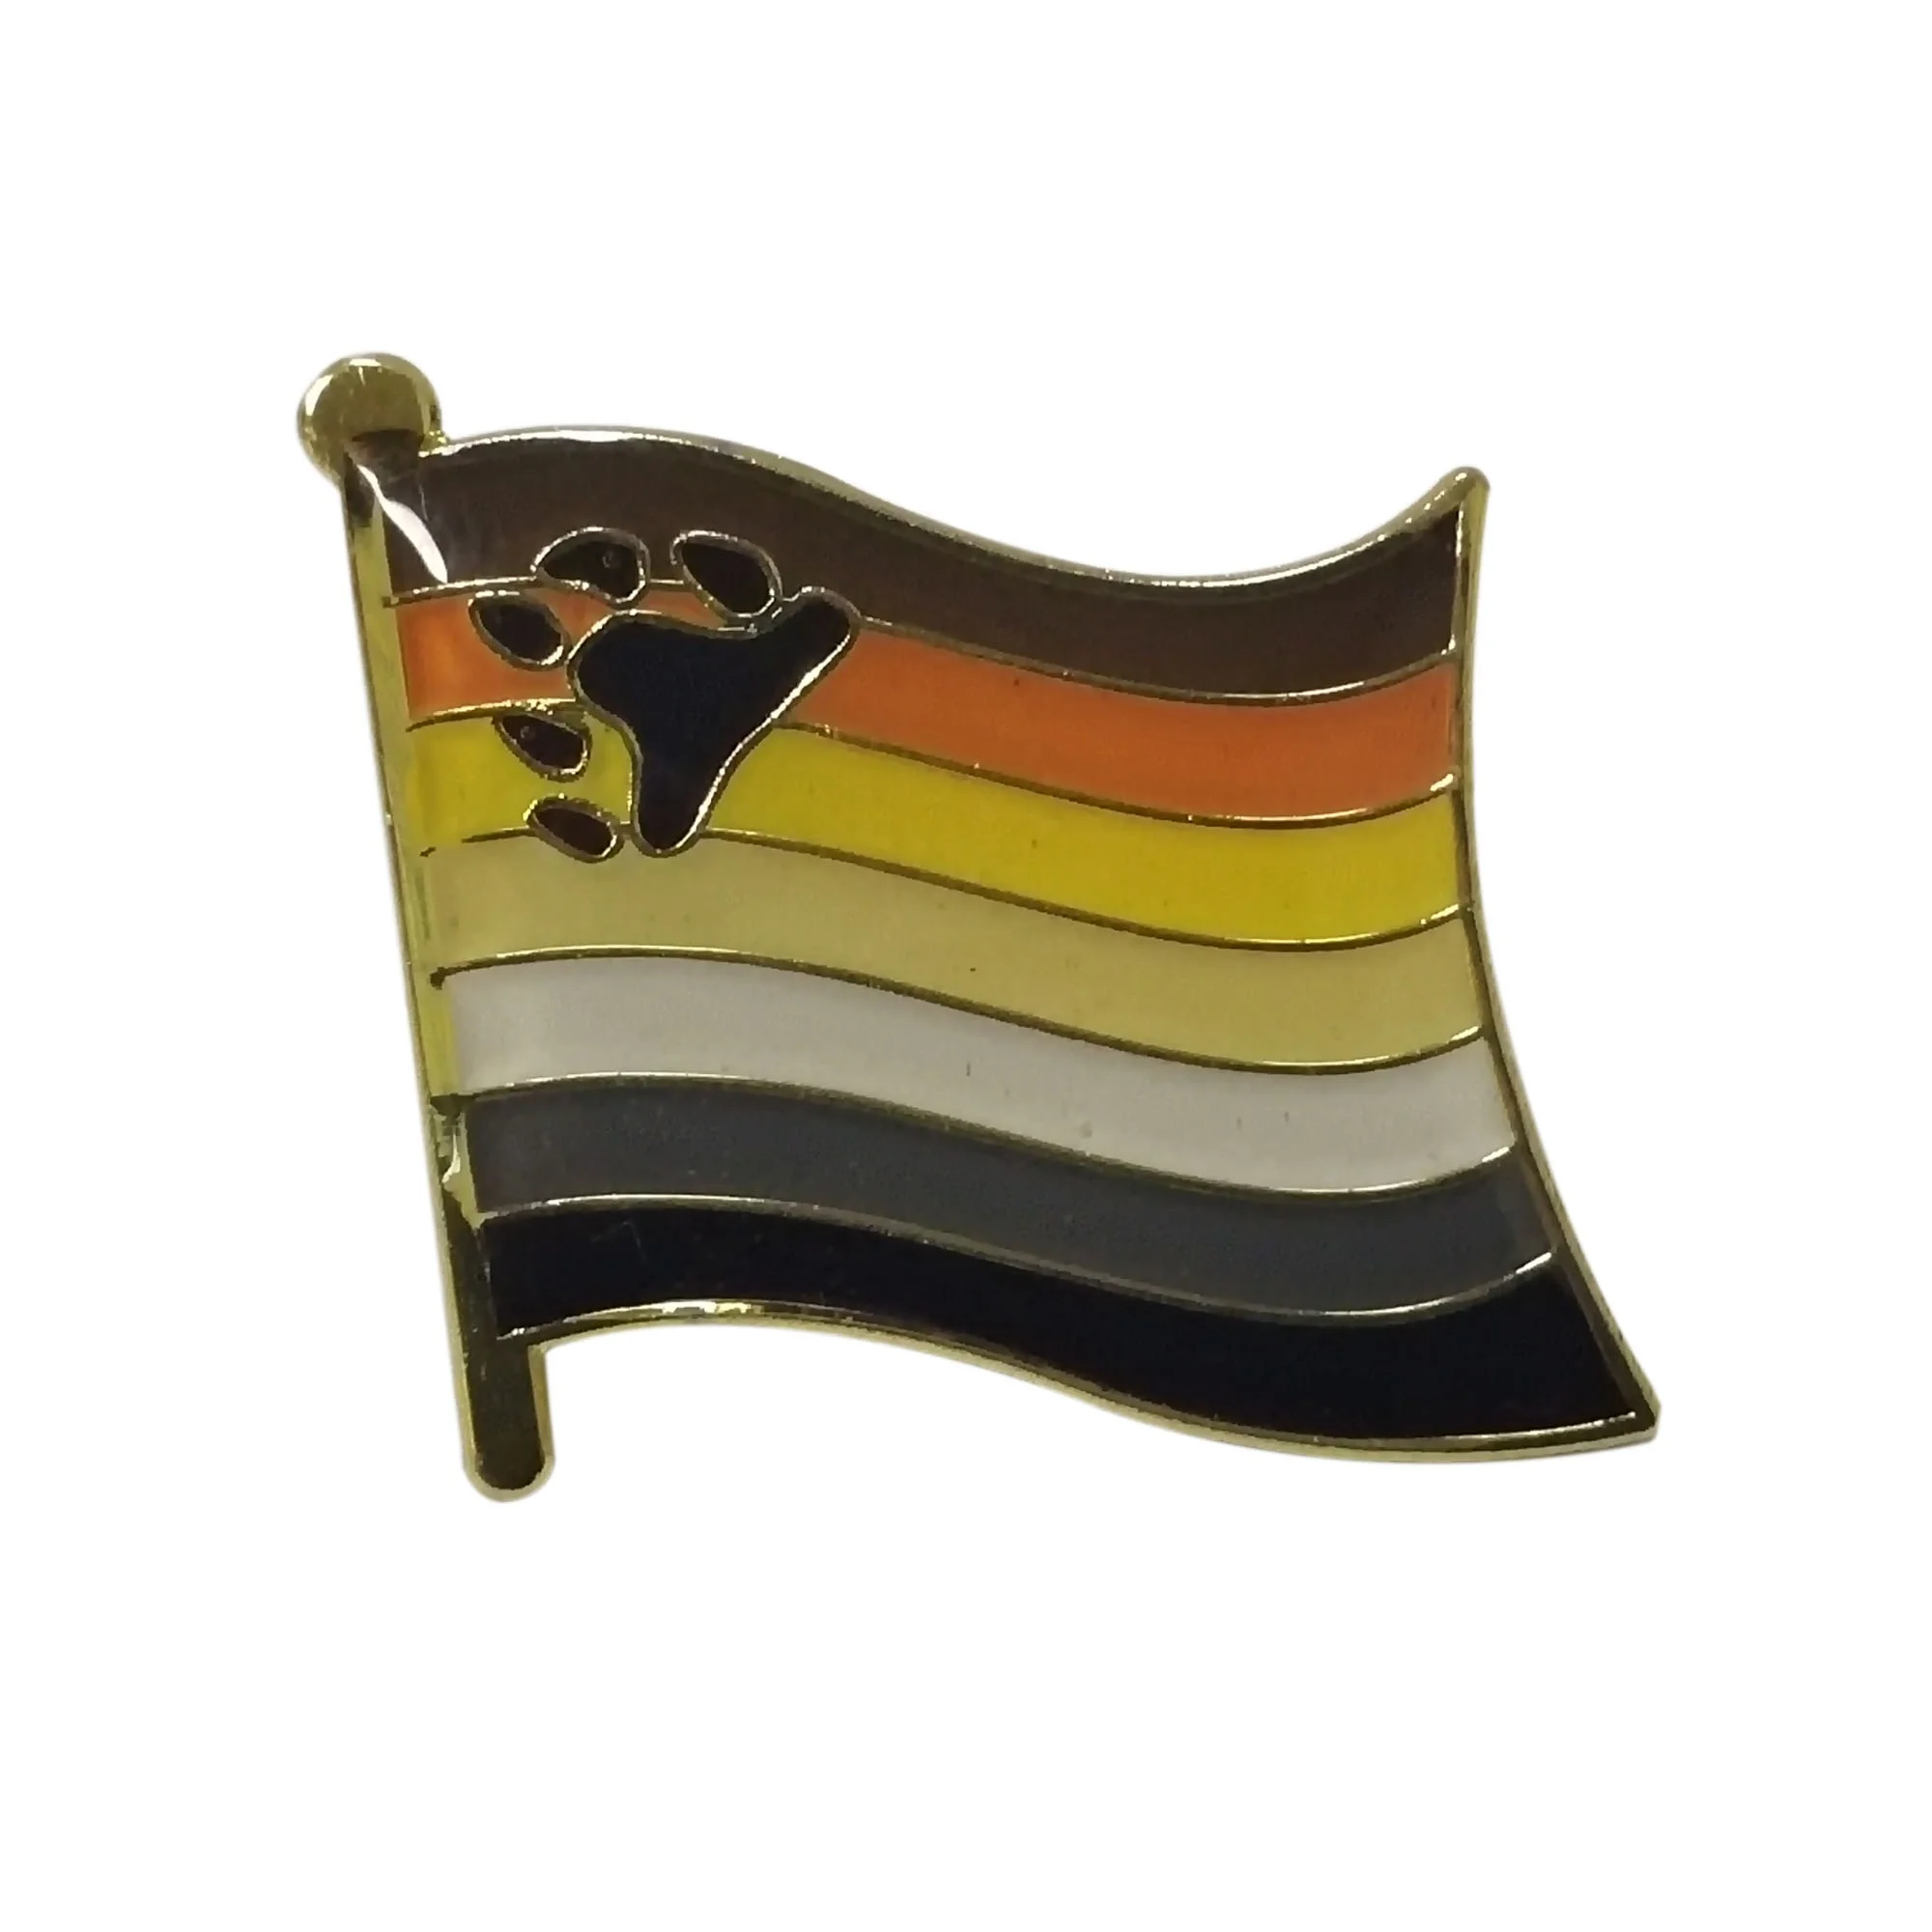 BEAR PRIDE FLAG LAPEL PIN 0.5" Hat Tie Tack Badge LGBTQ Gay Brotherhood Culture 